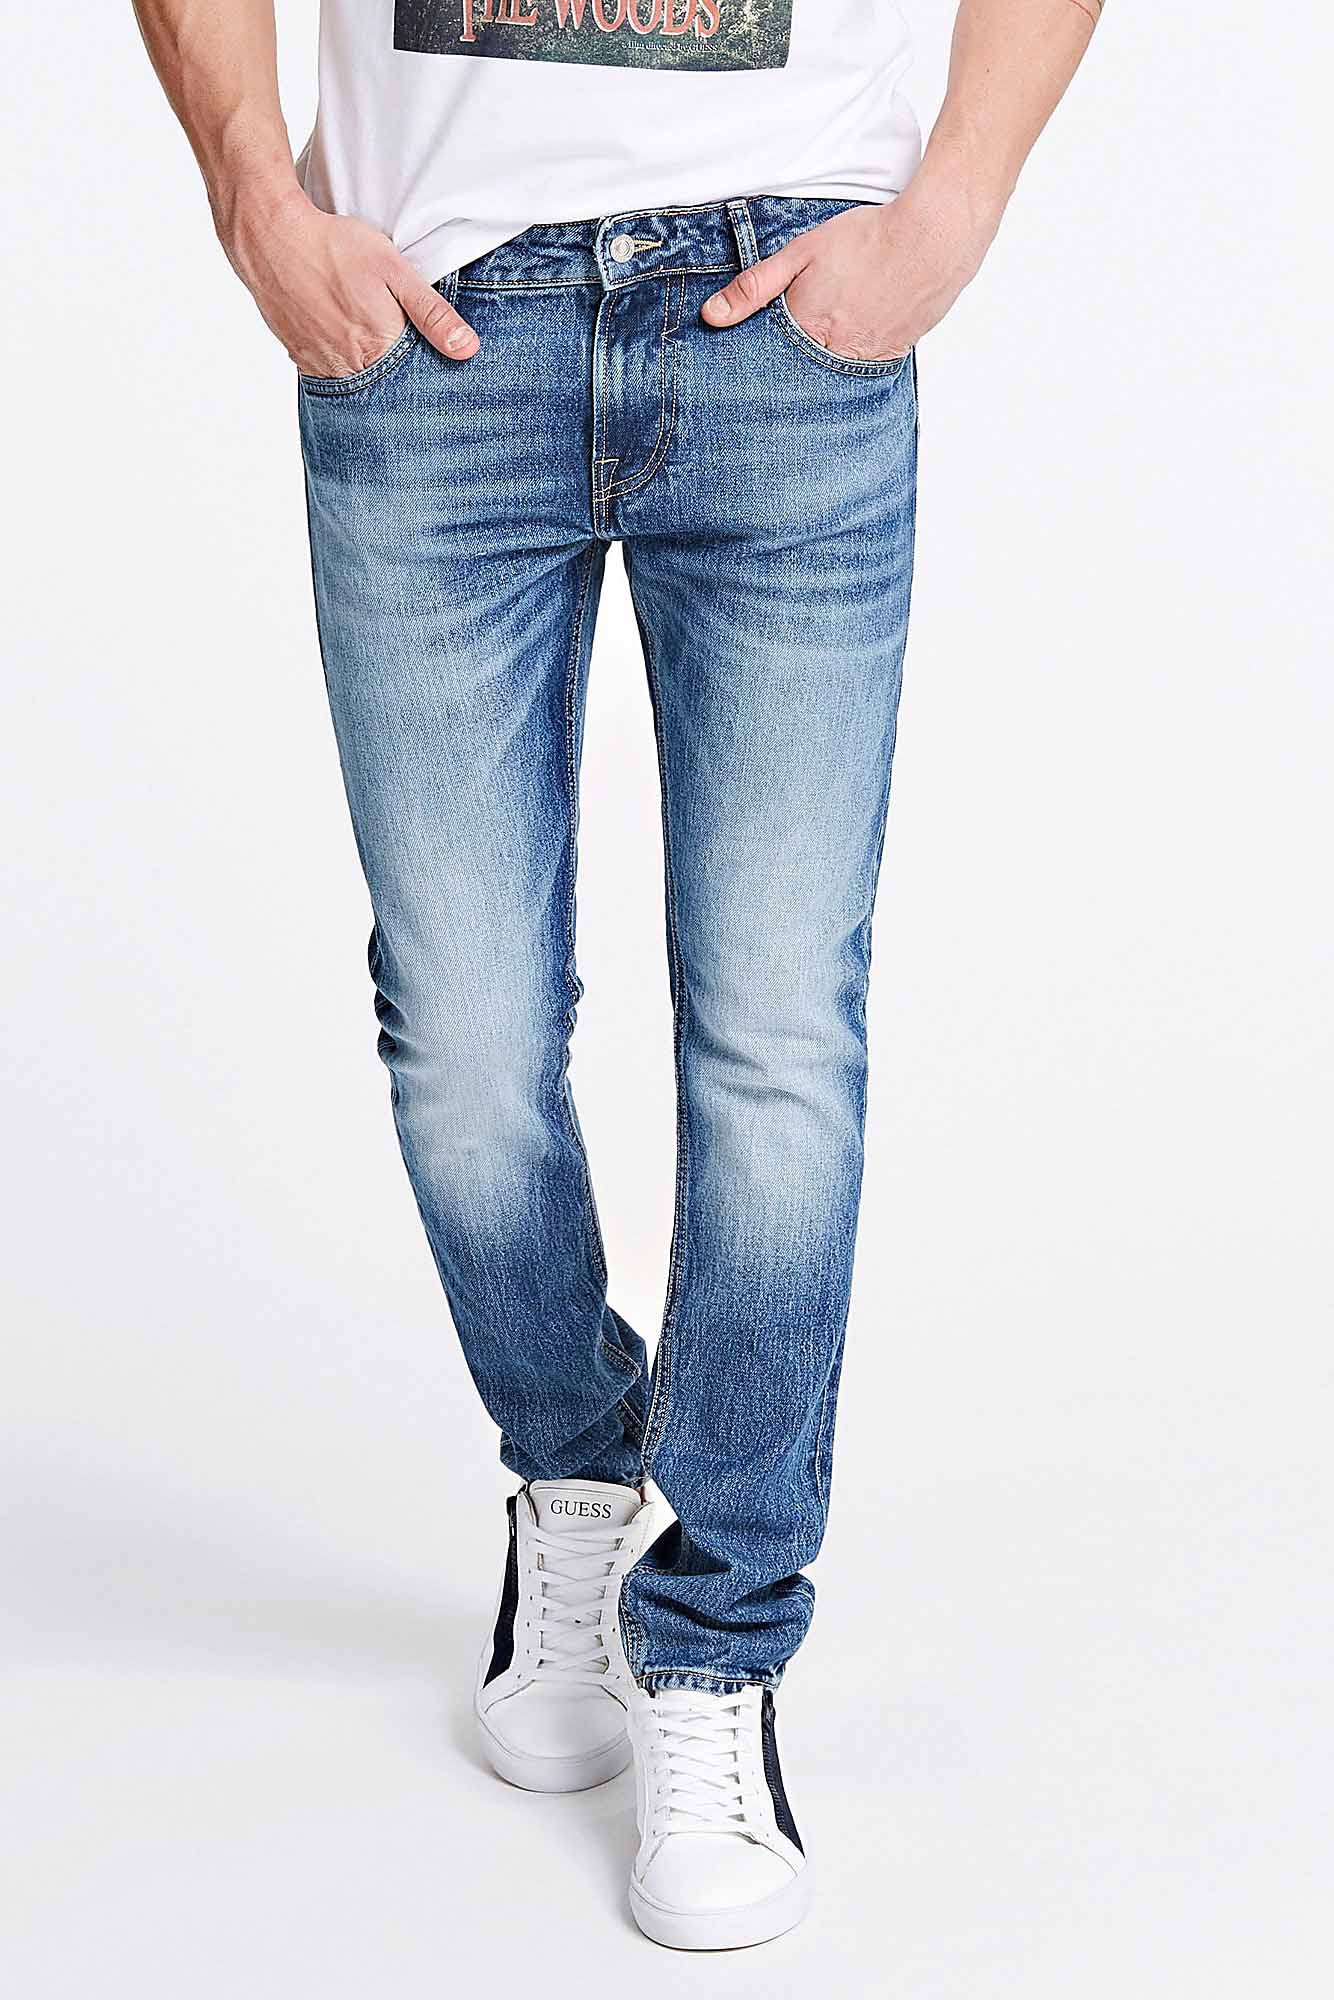 programa Árbol alfombra Pantalón de la marca Guess Jeans de color Jeans para hombre